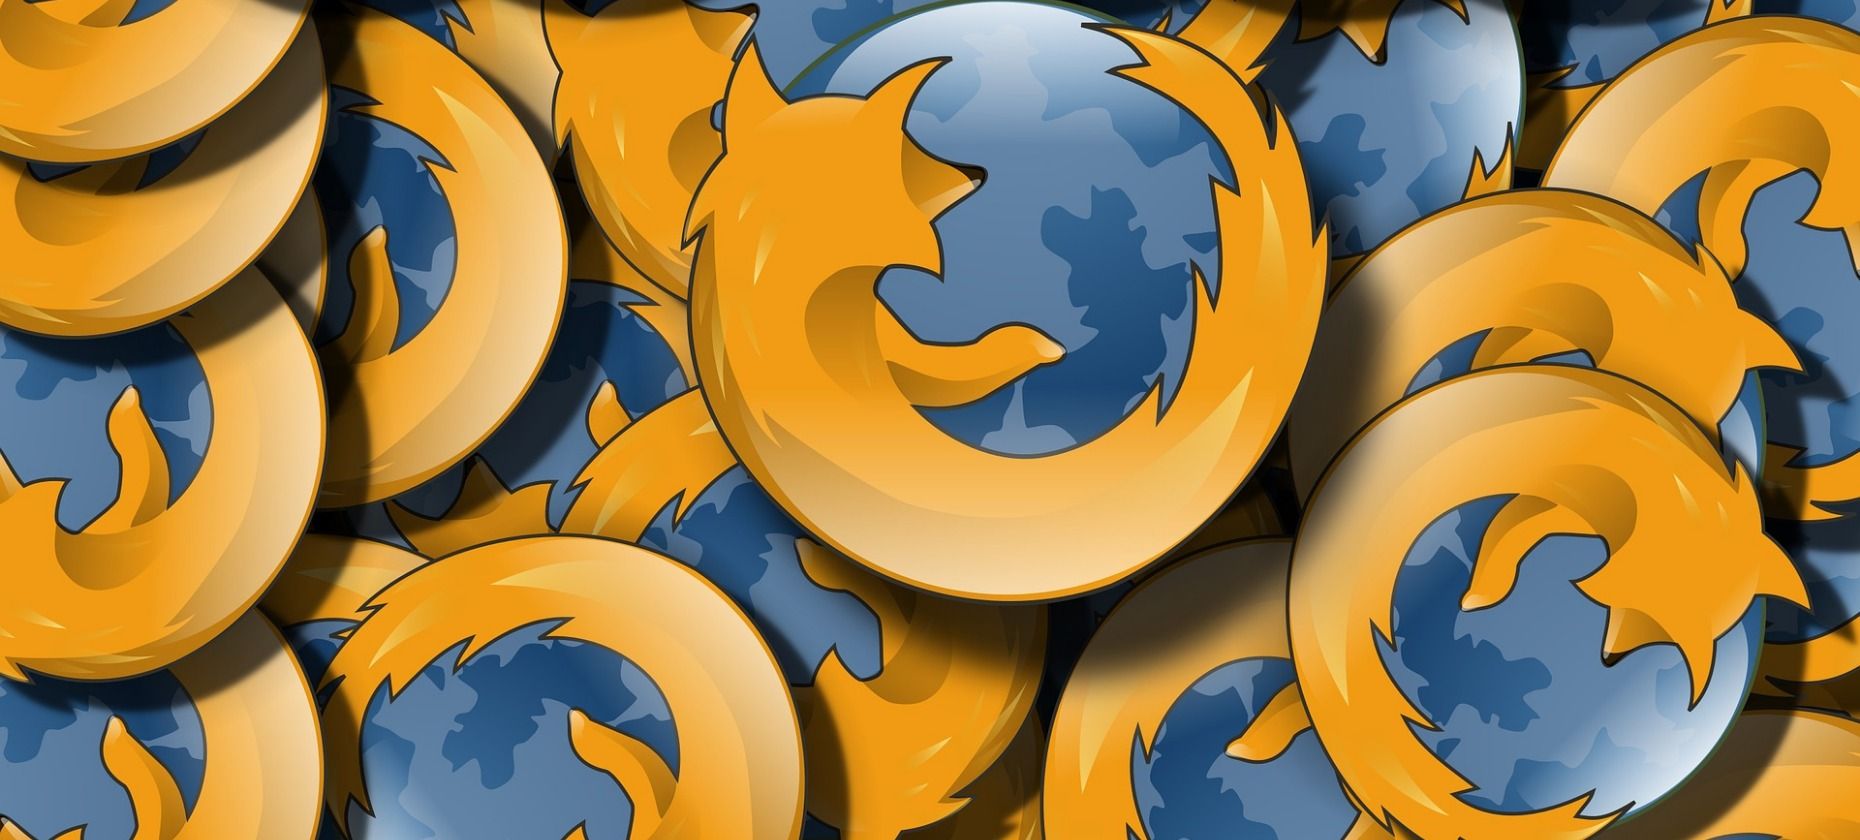 Multiple Firefox logo symbols